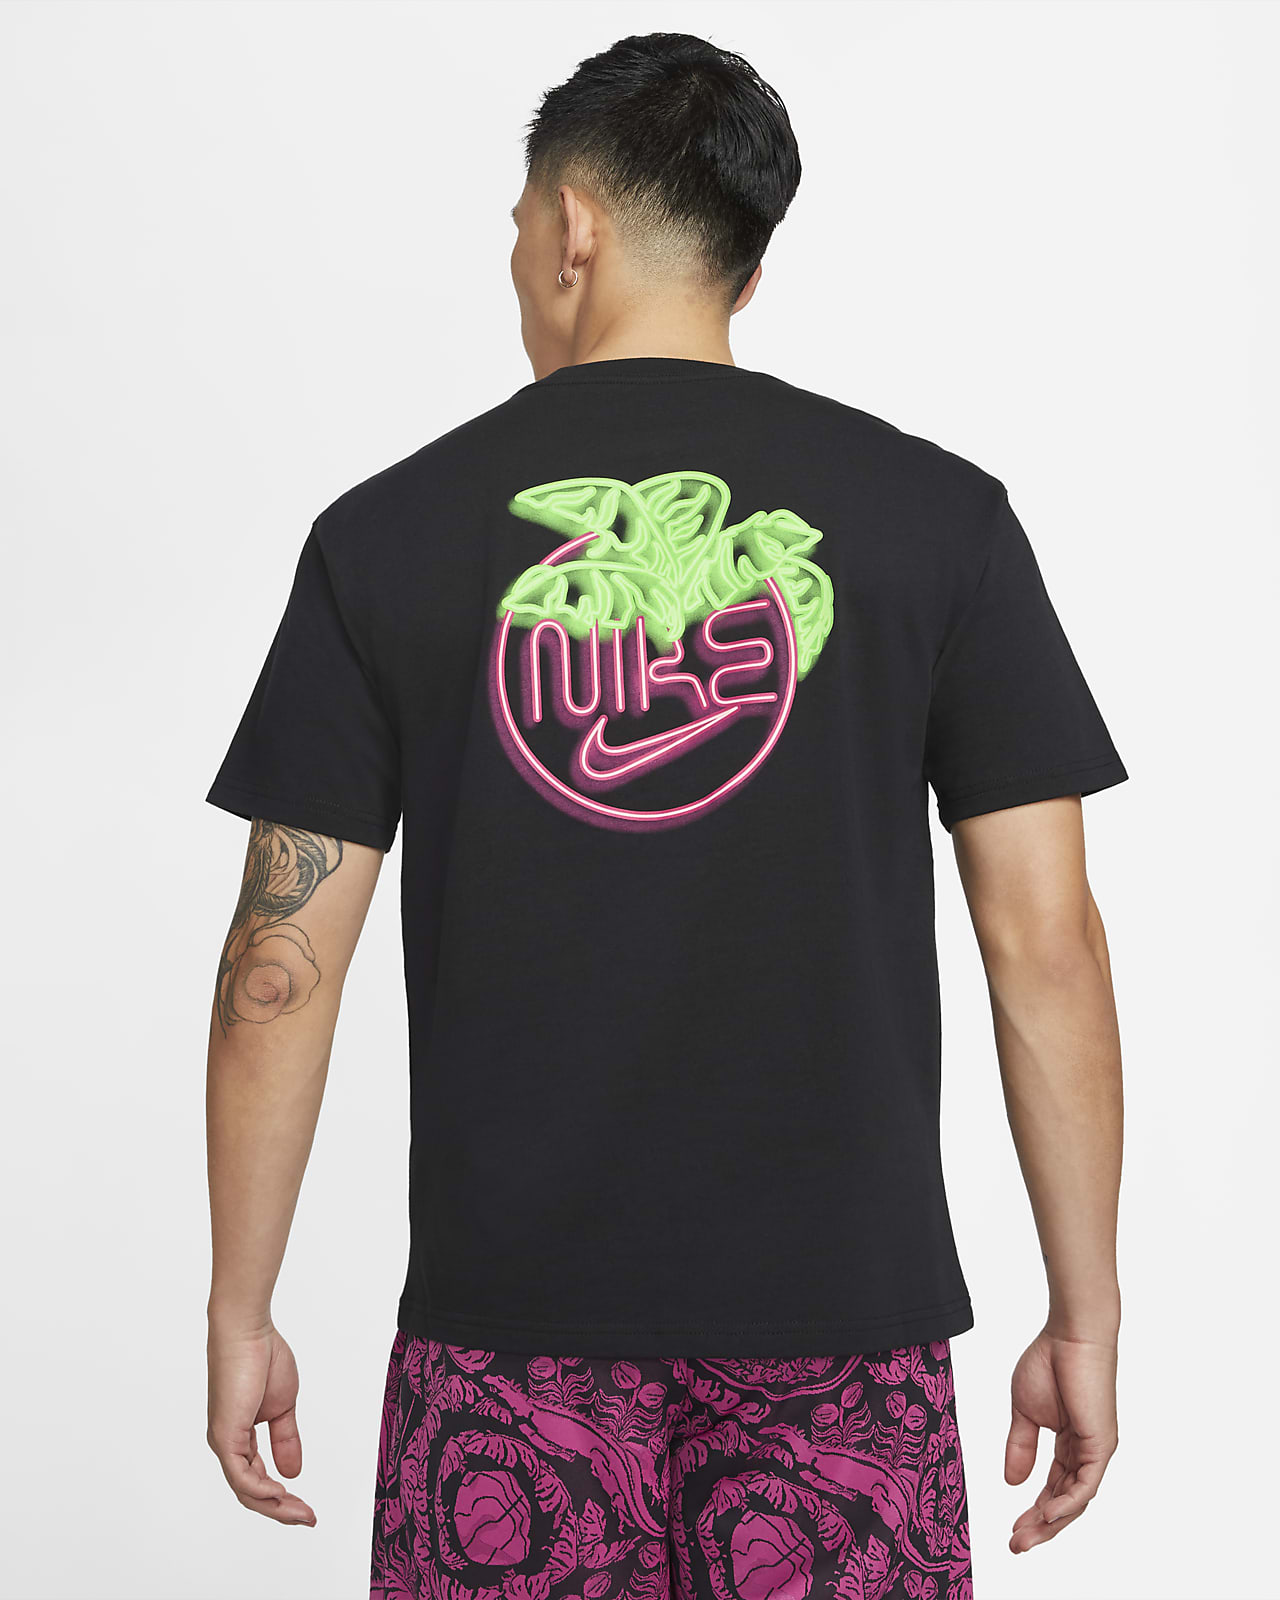 Nike Miami Men's Basketball T-Shirt 